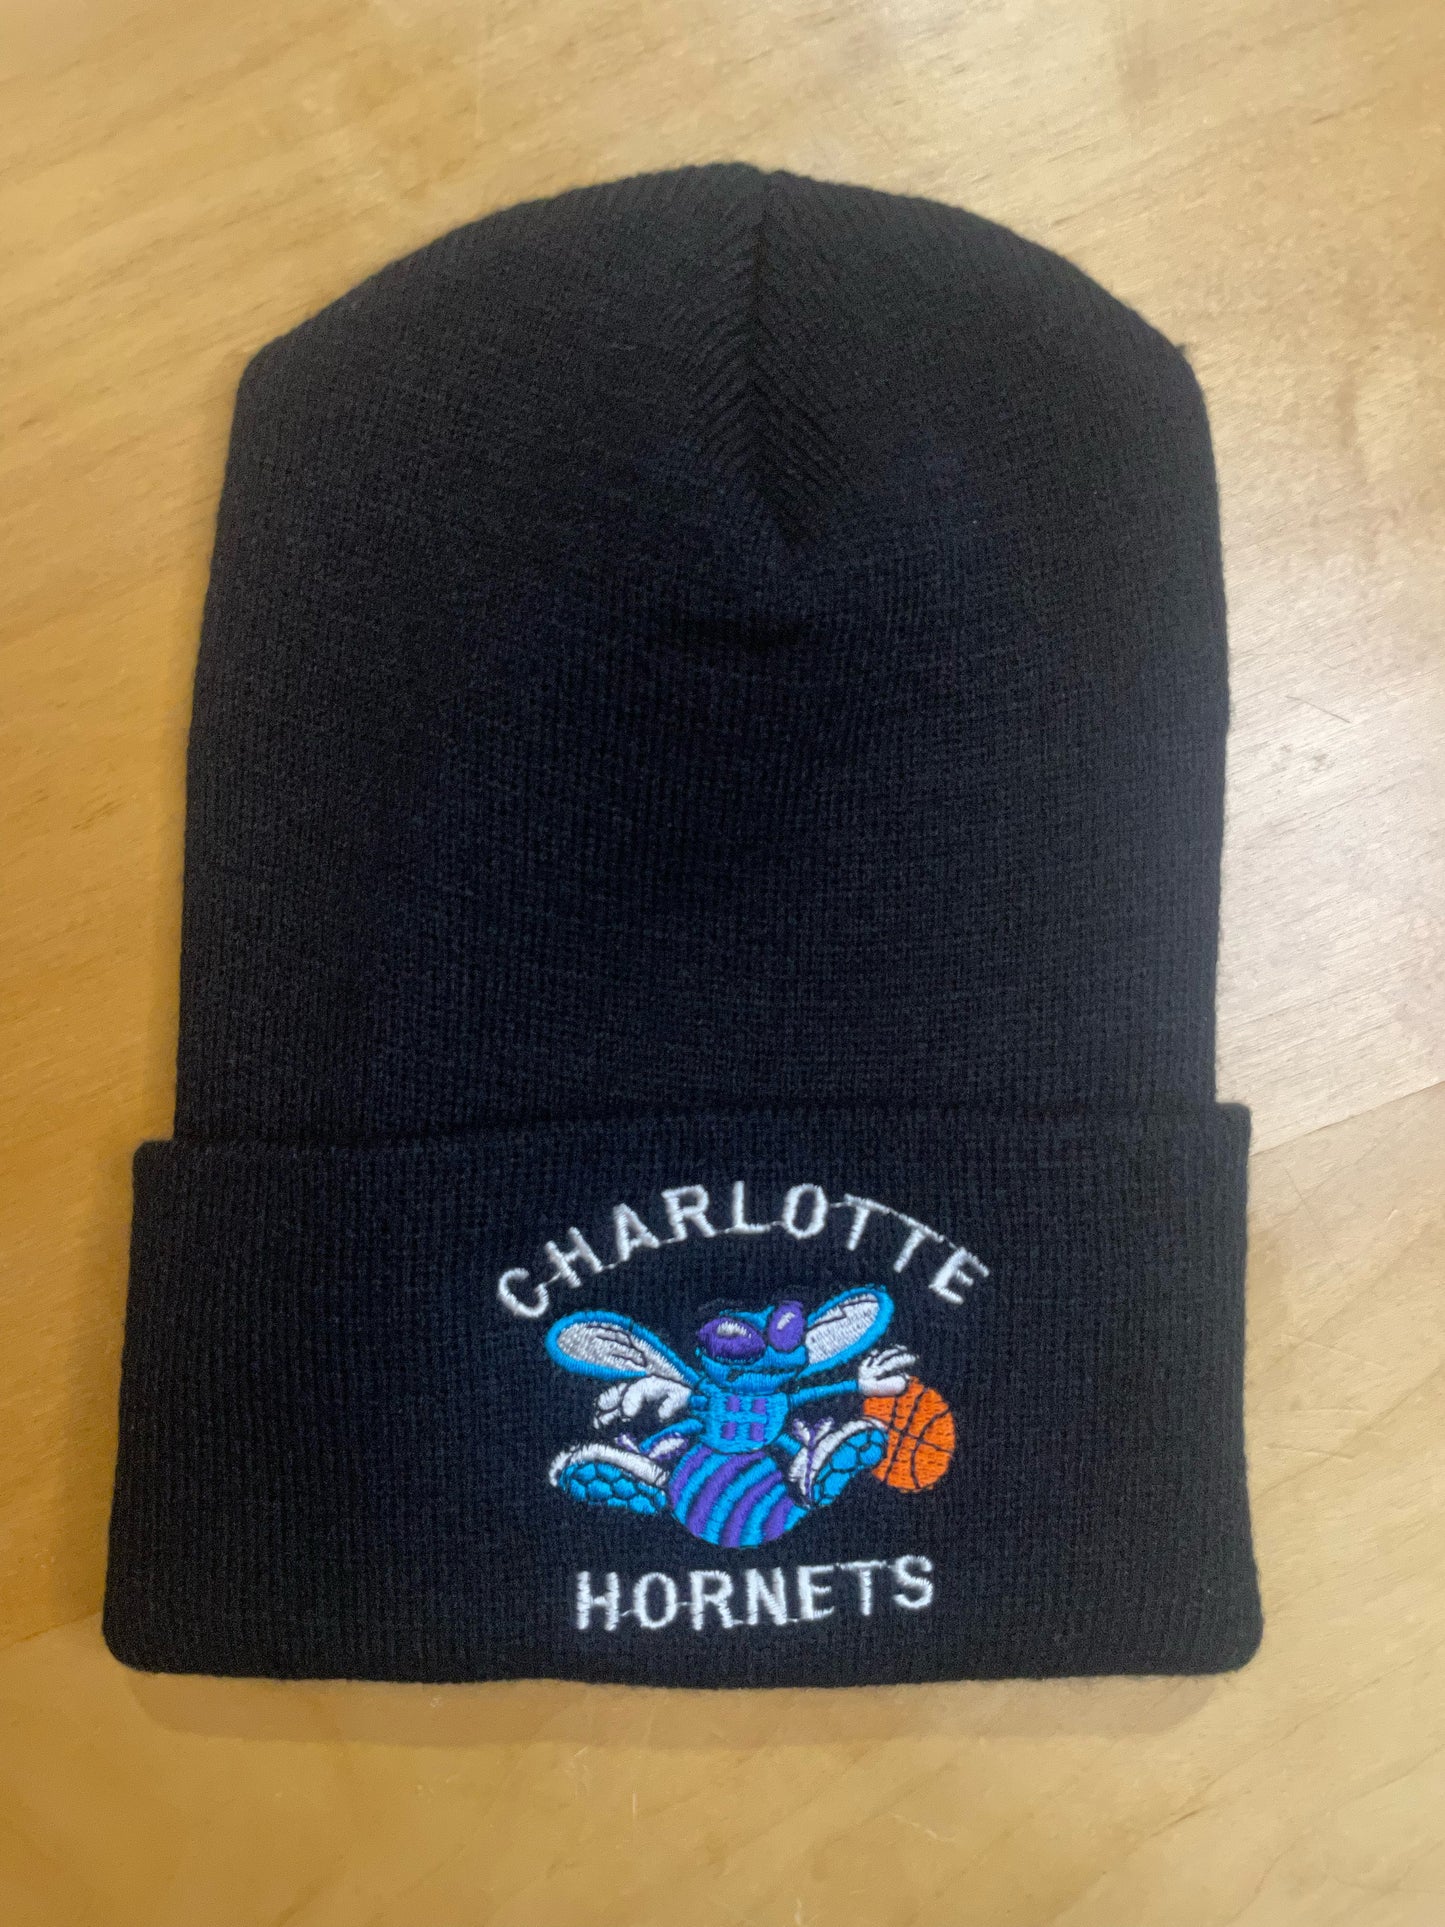 CHARLOTTE HORNETS NBA BEANIE HAT SZ: One size